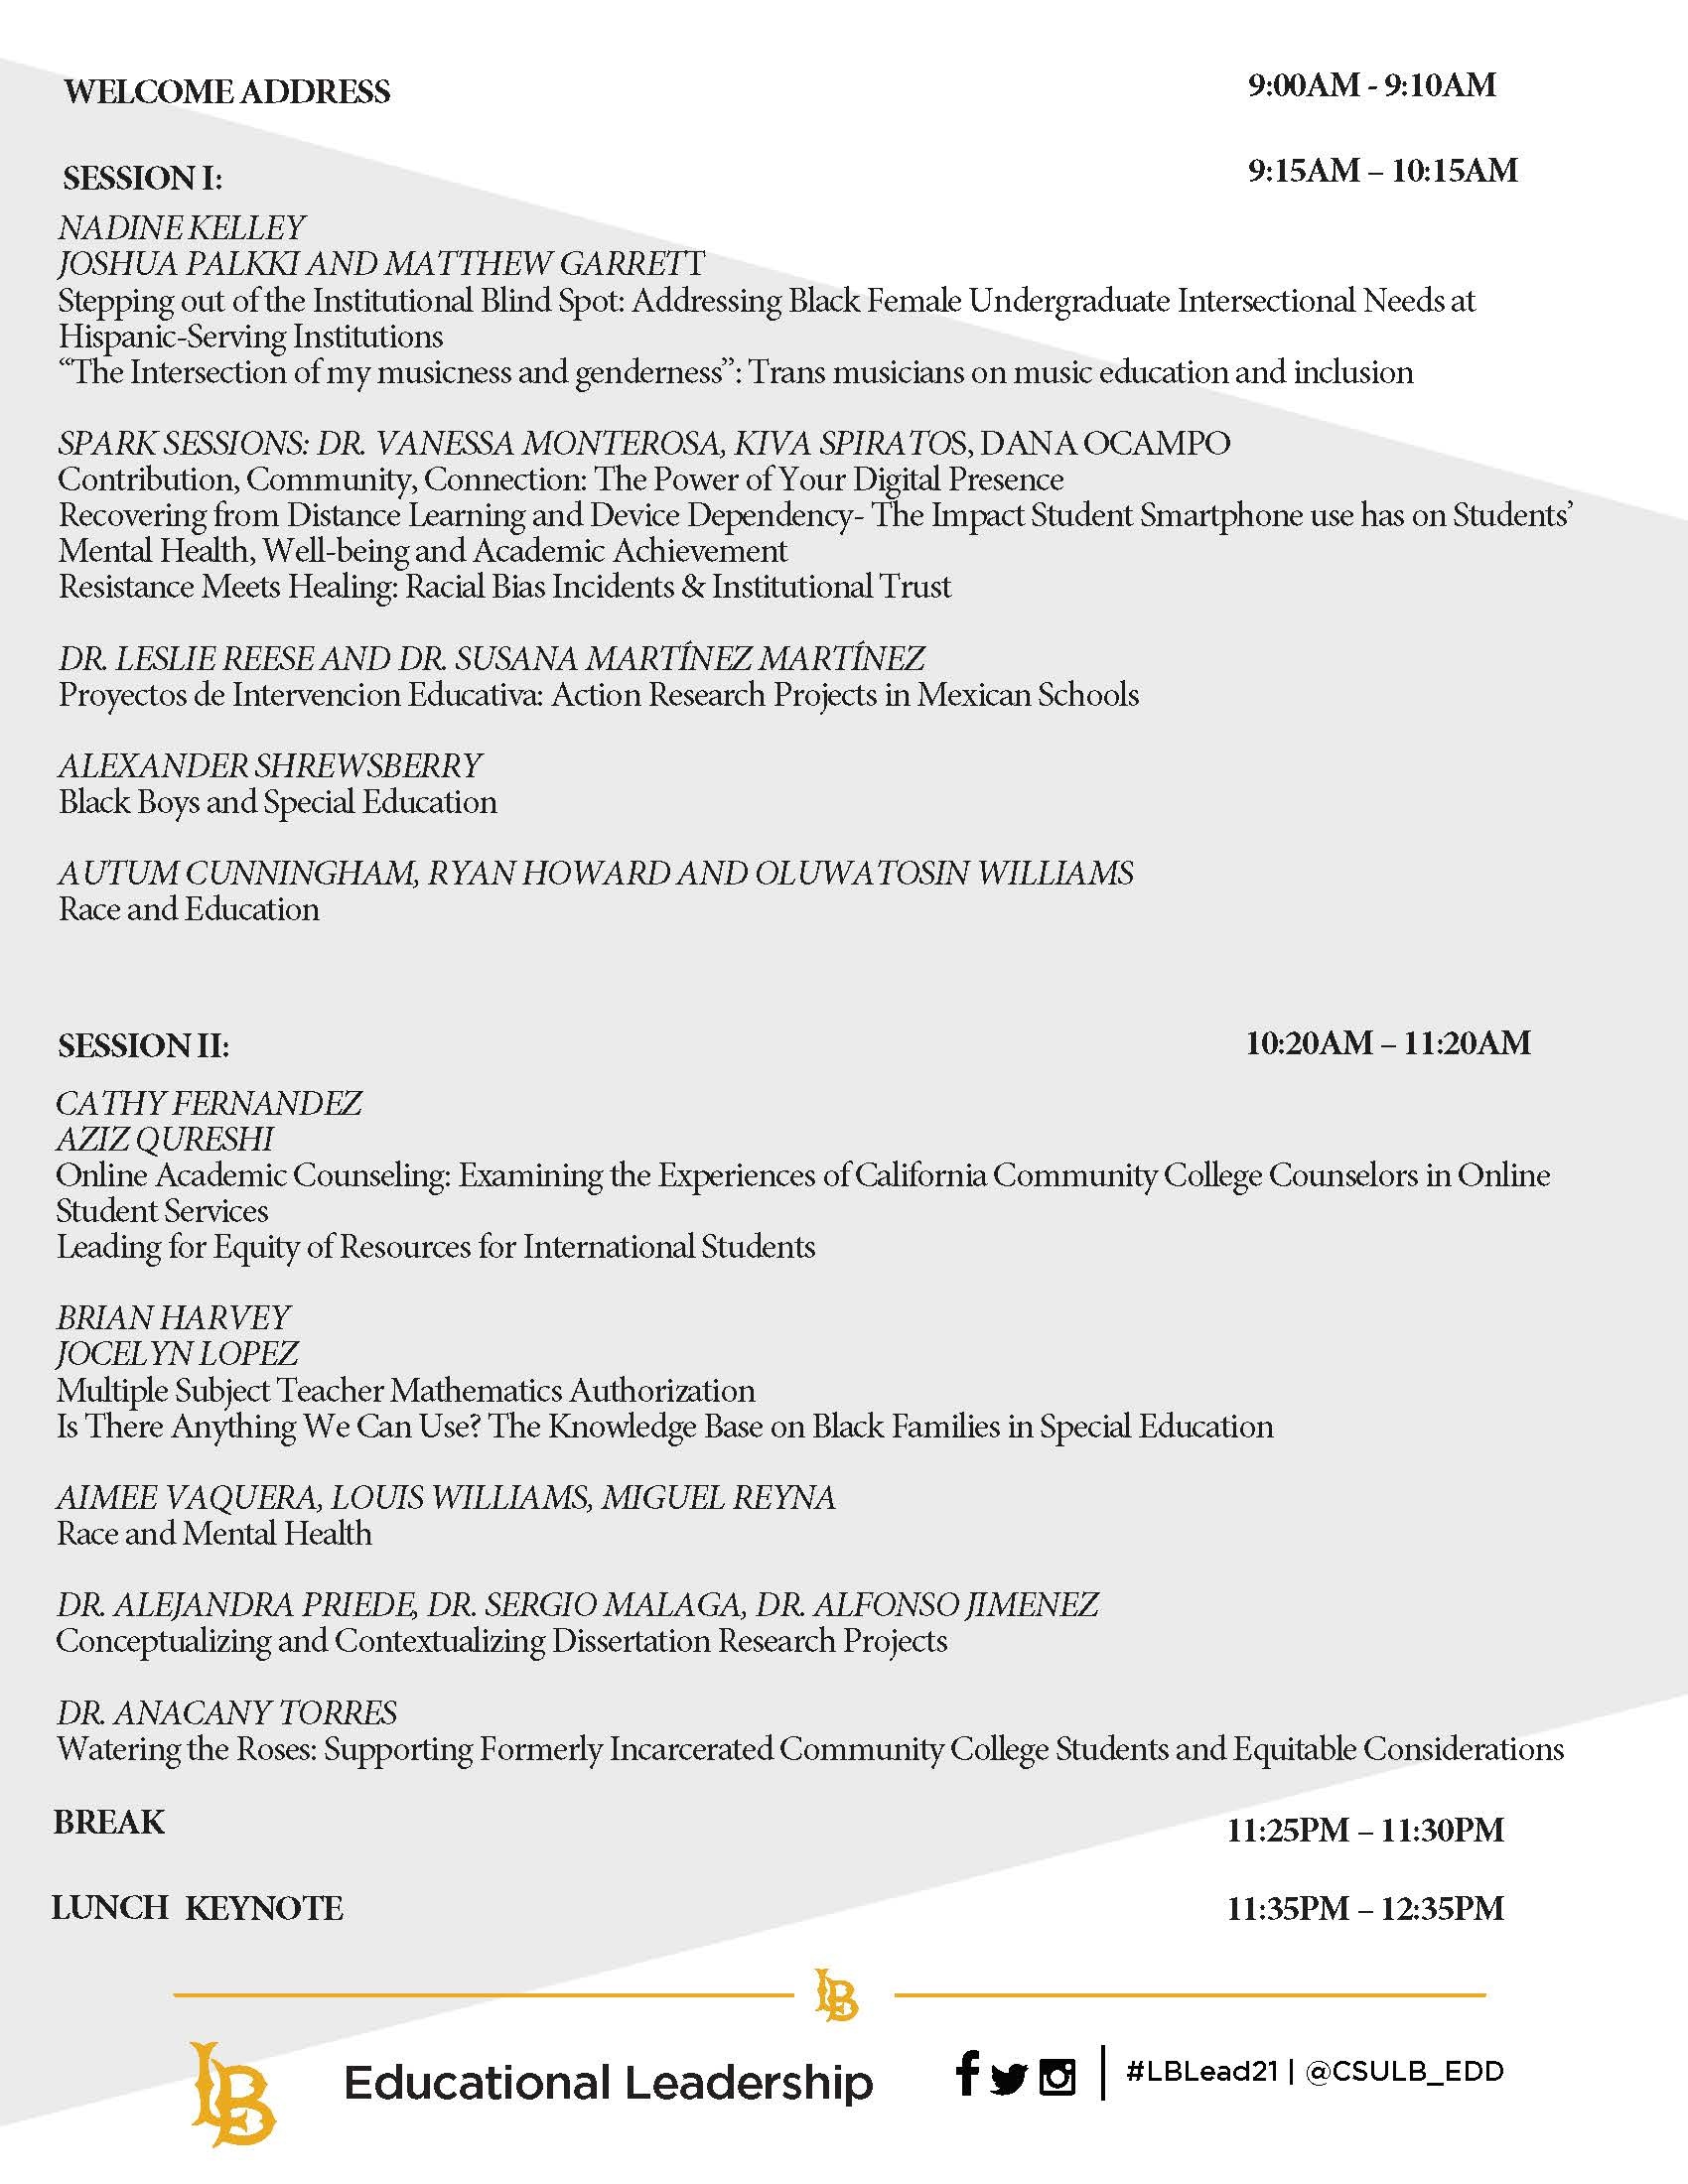 Symposium 2021 Schedule at a Glance